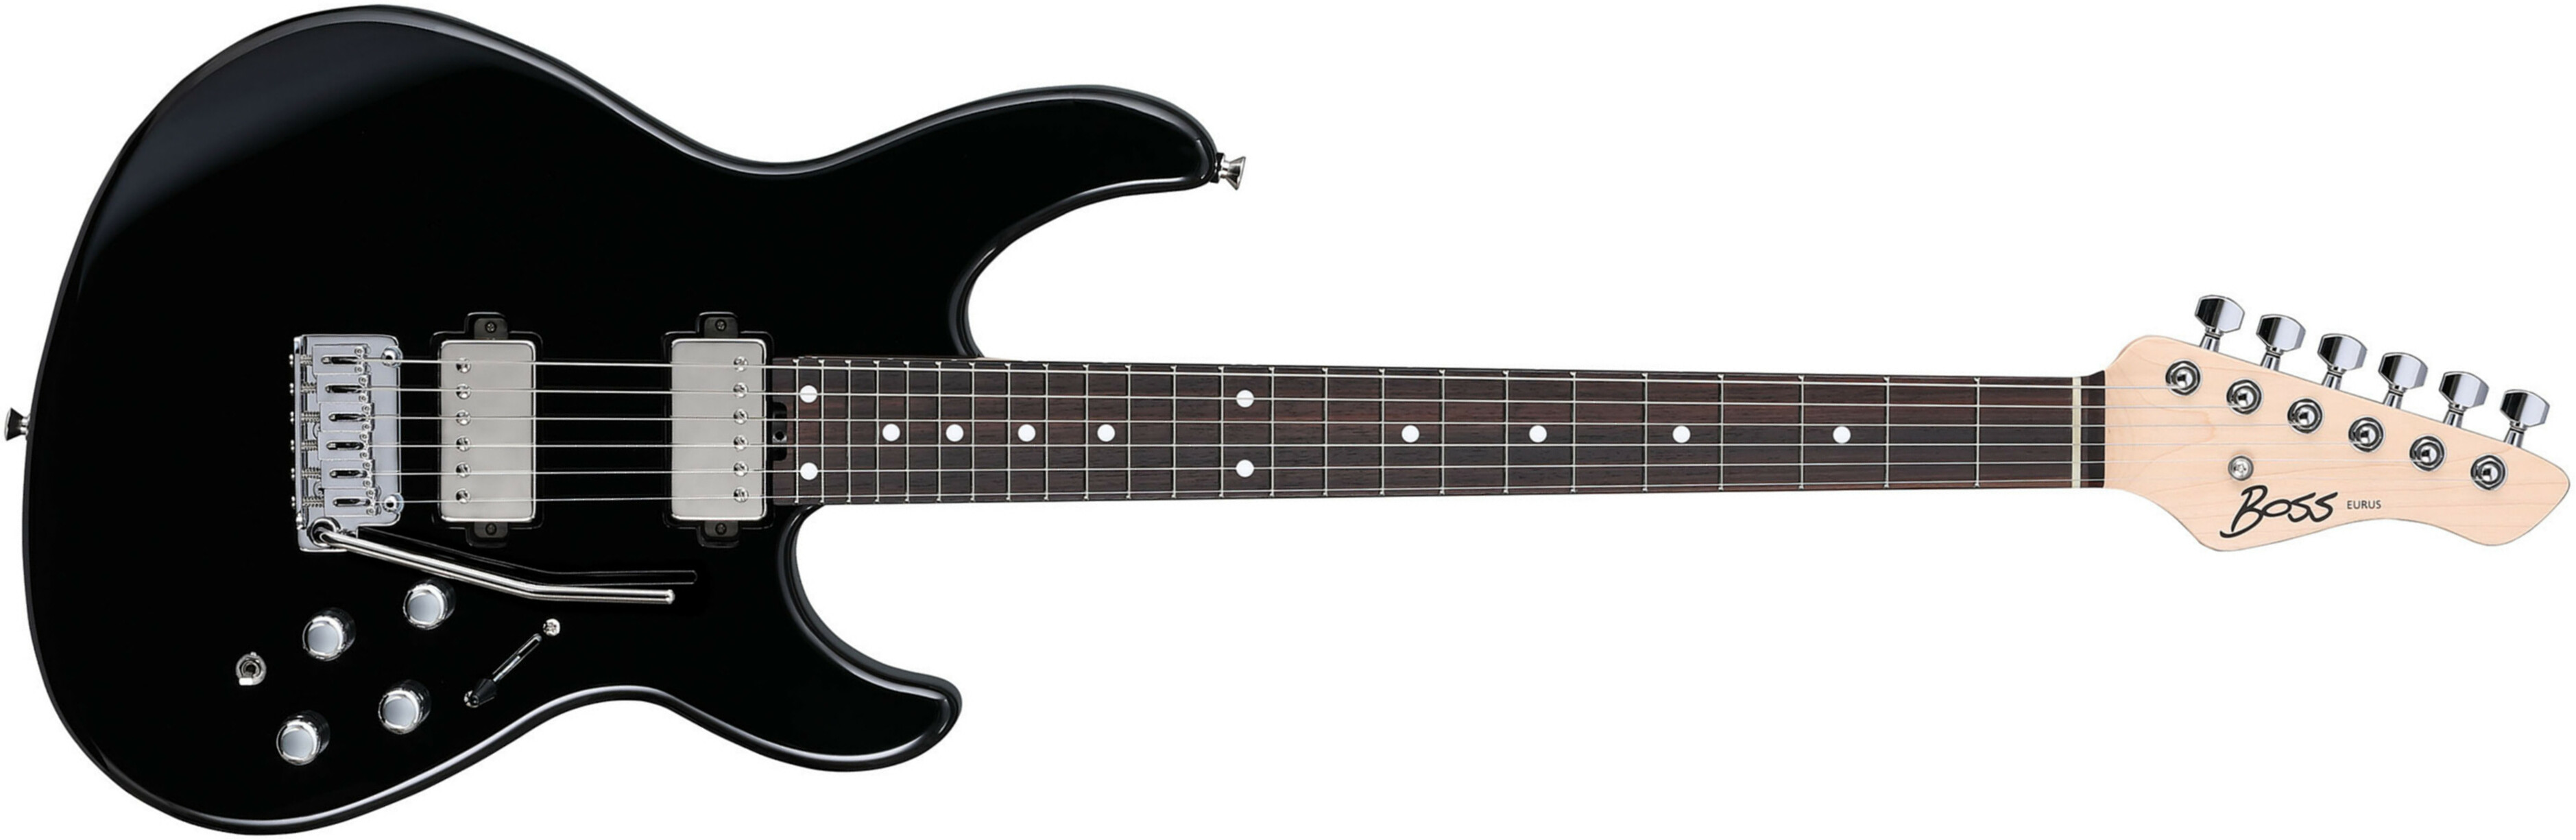 Boss Eurus Gs-1 Hh Trem Rw - Black - Guitarra eléctrica de modelización - Main picture